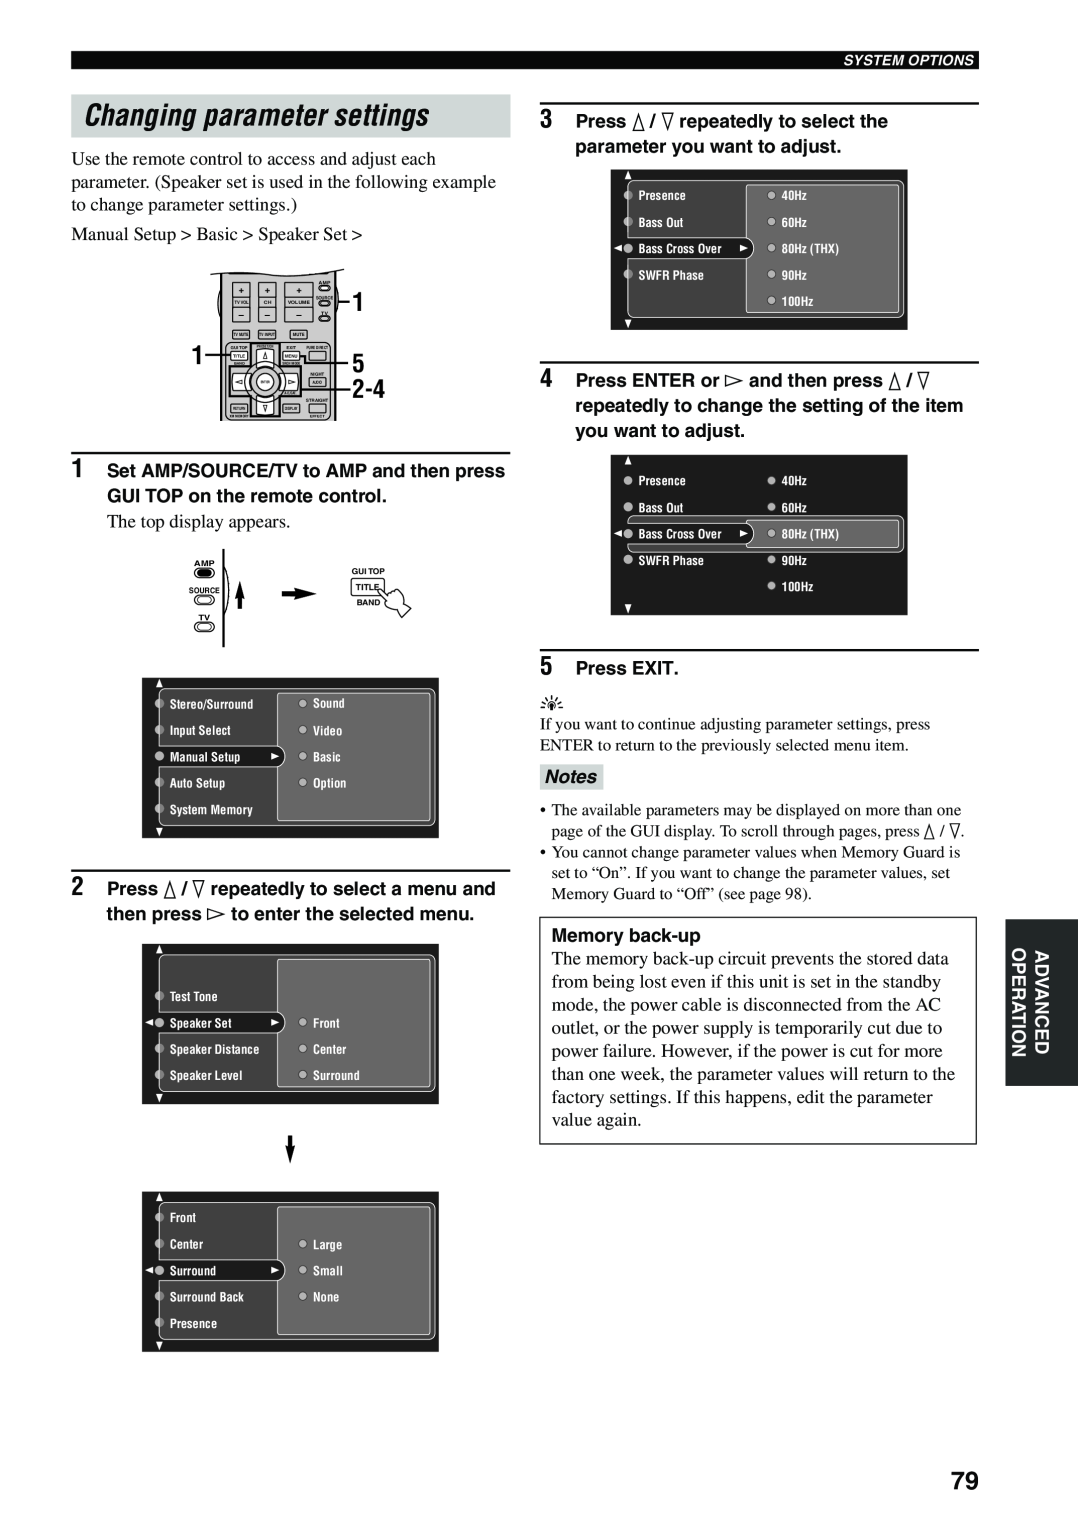 Yamaha X-V2600 owner manual Changing parameter settings, 5Press EXIT, Notes 